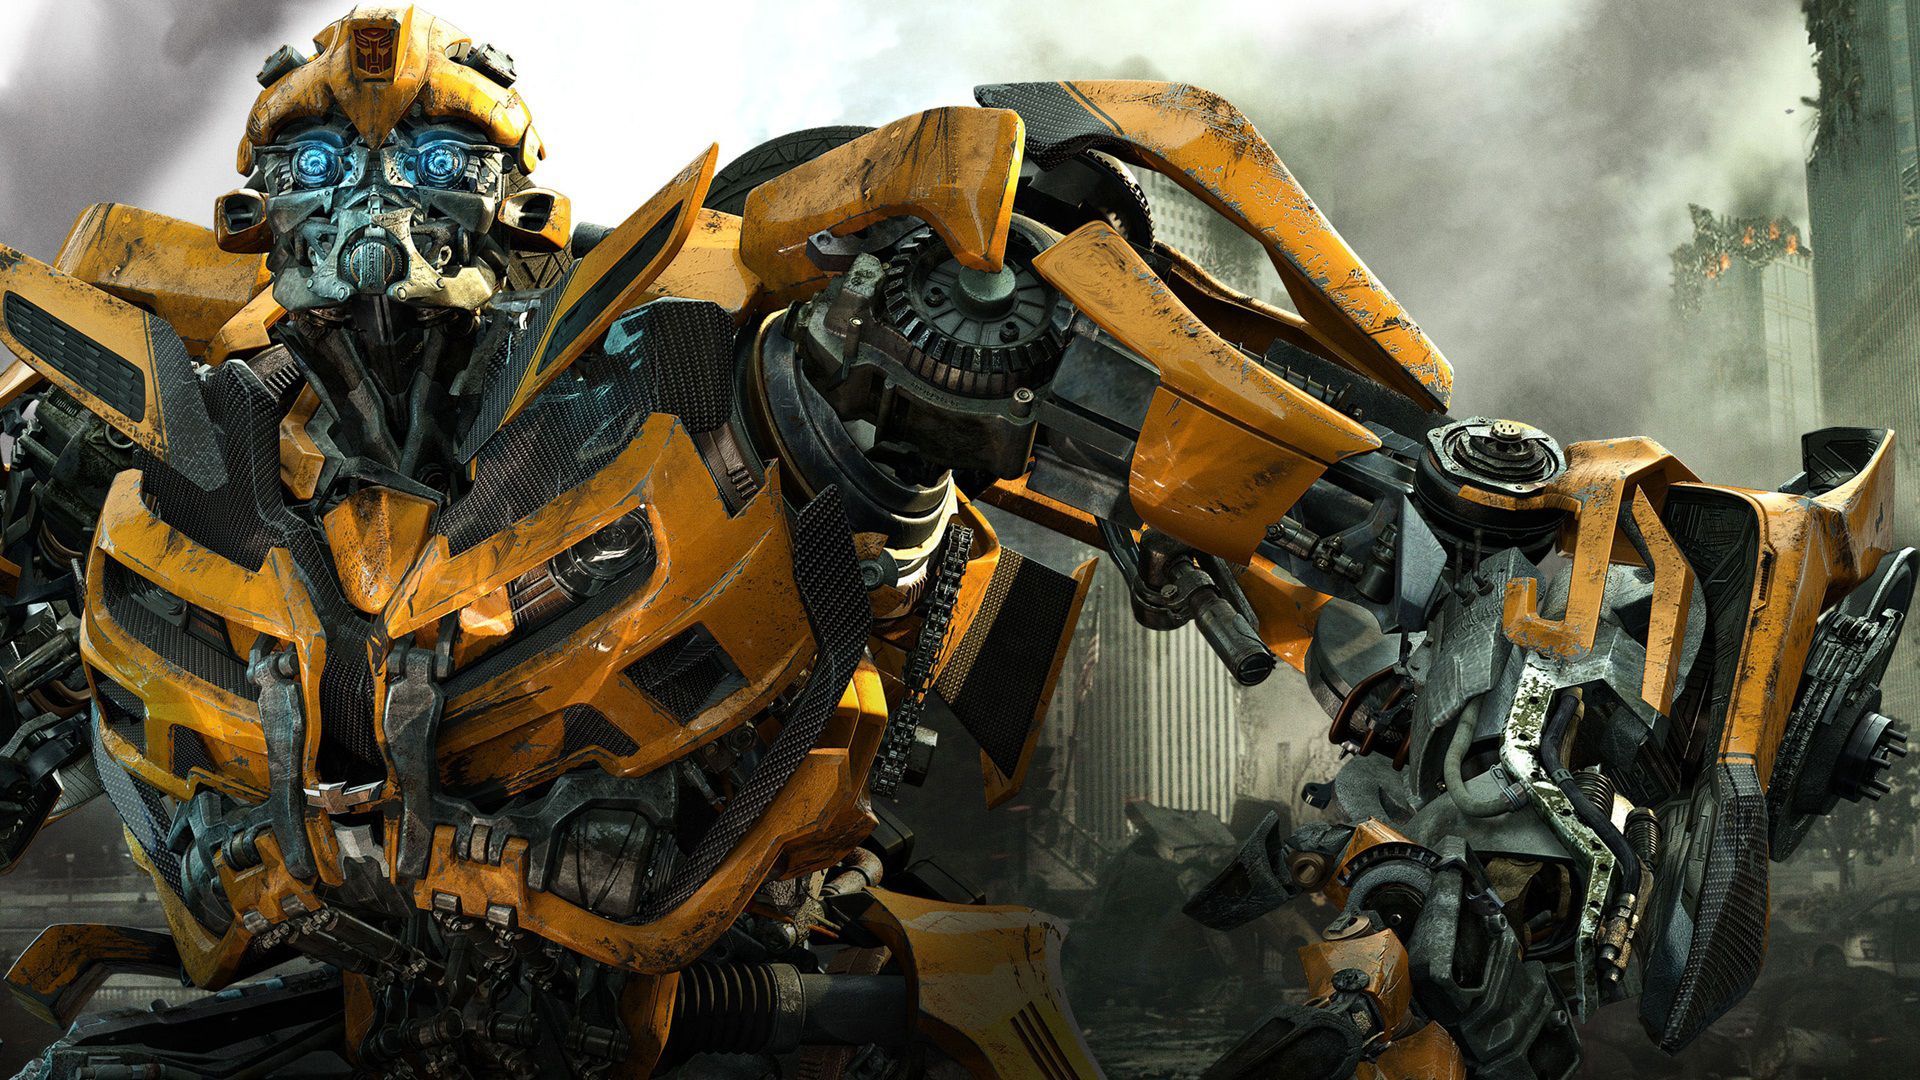 Bumblebee Transformers Movie Scene - HD Wallpaper 